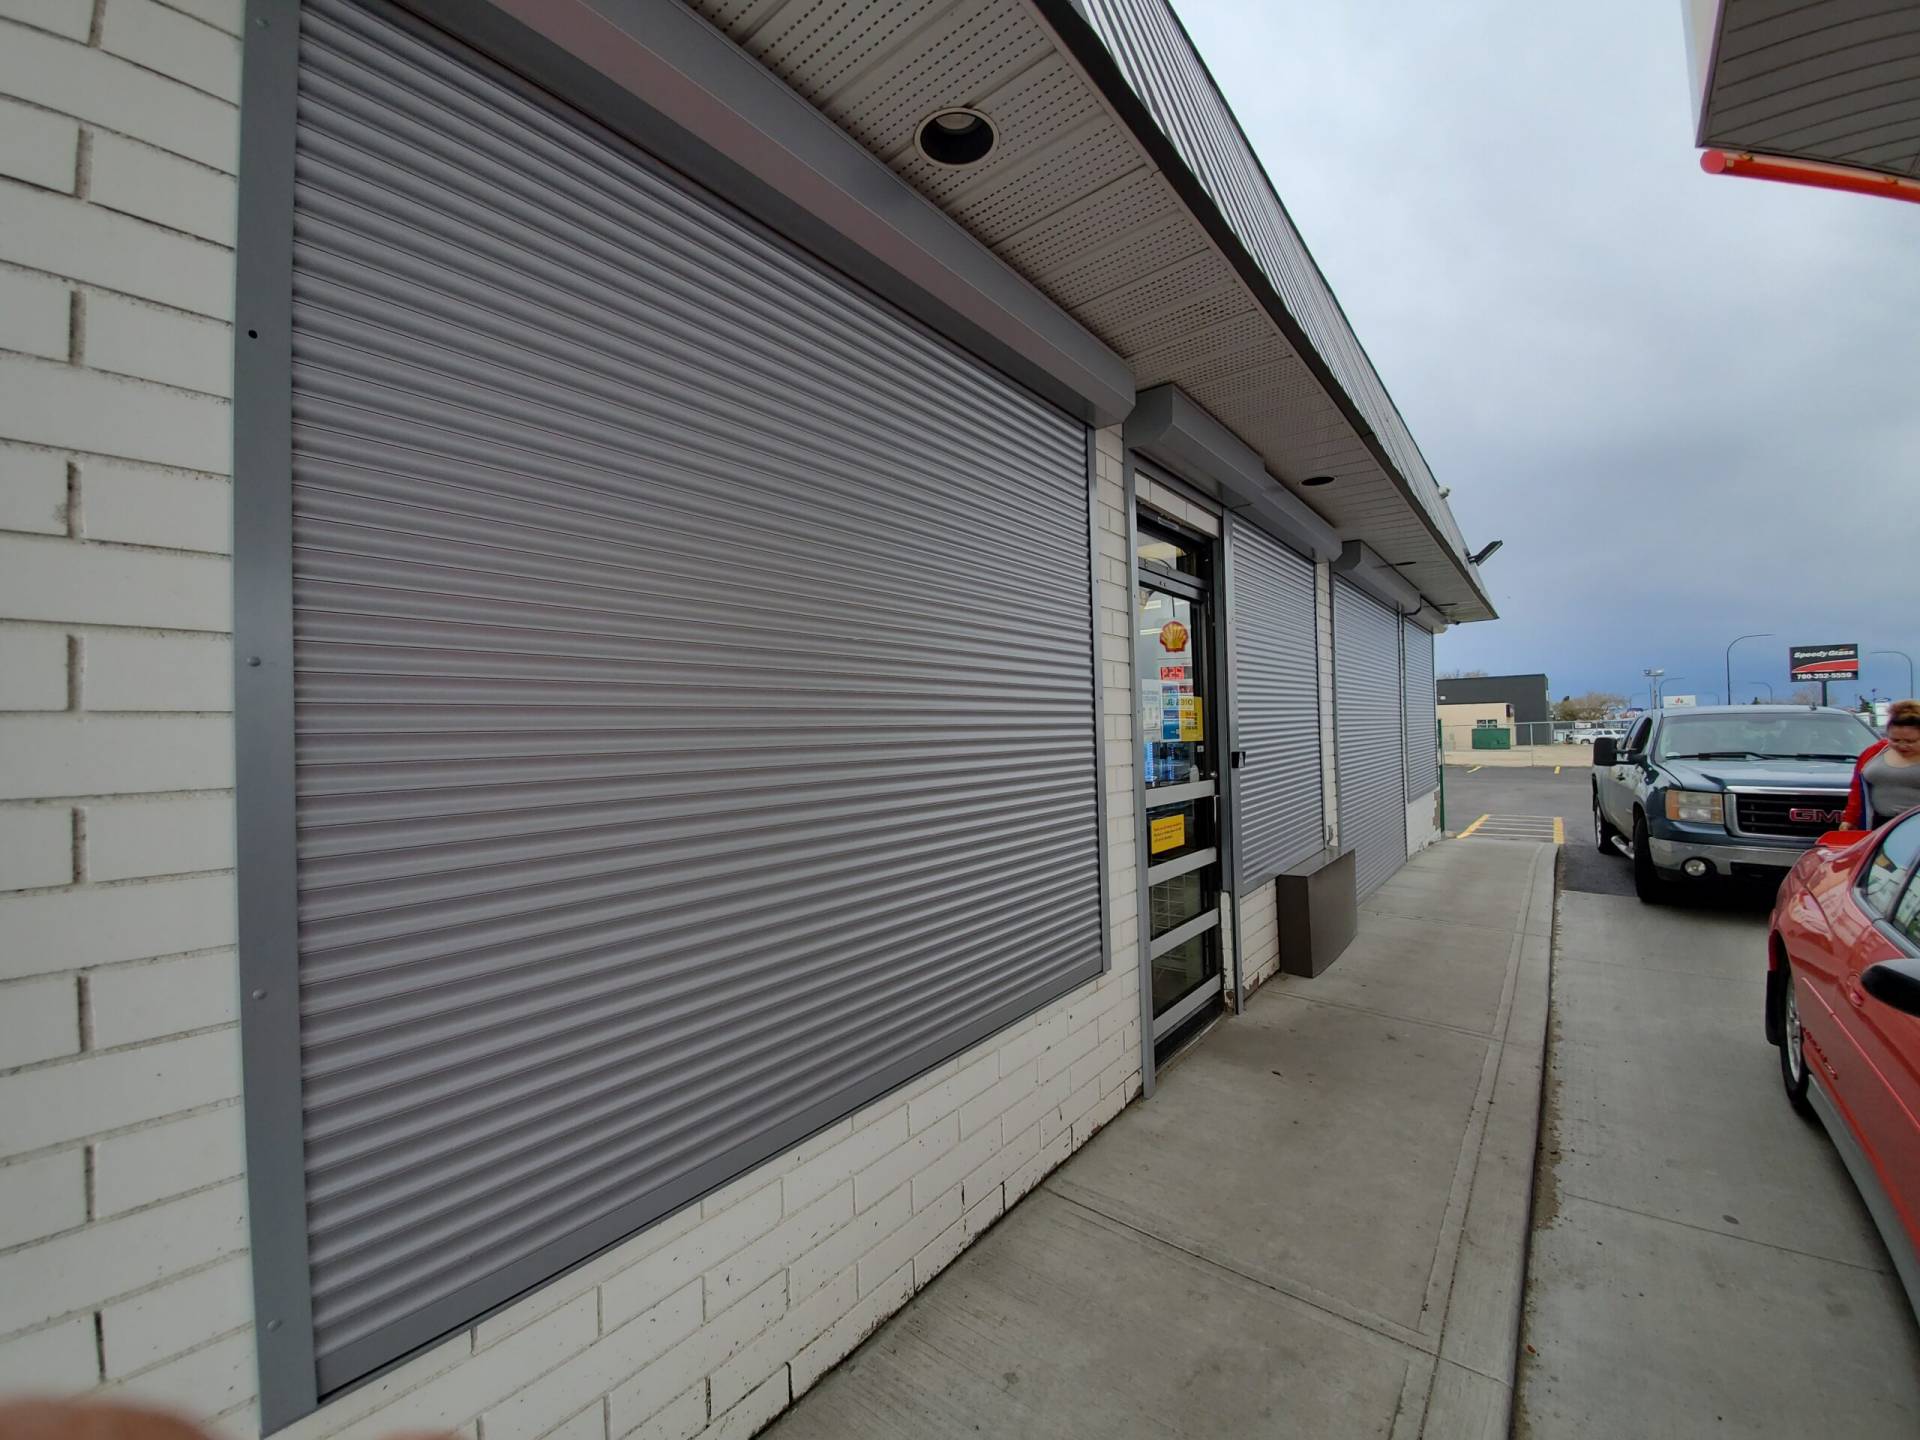 Aluroll shutters in Wetaskiwin Alberta, Shell Gas station convenience store